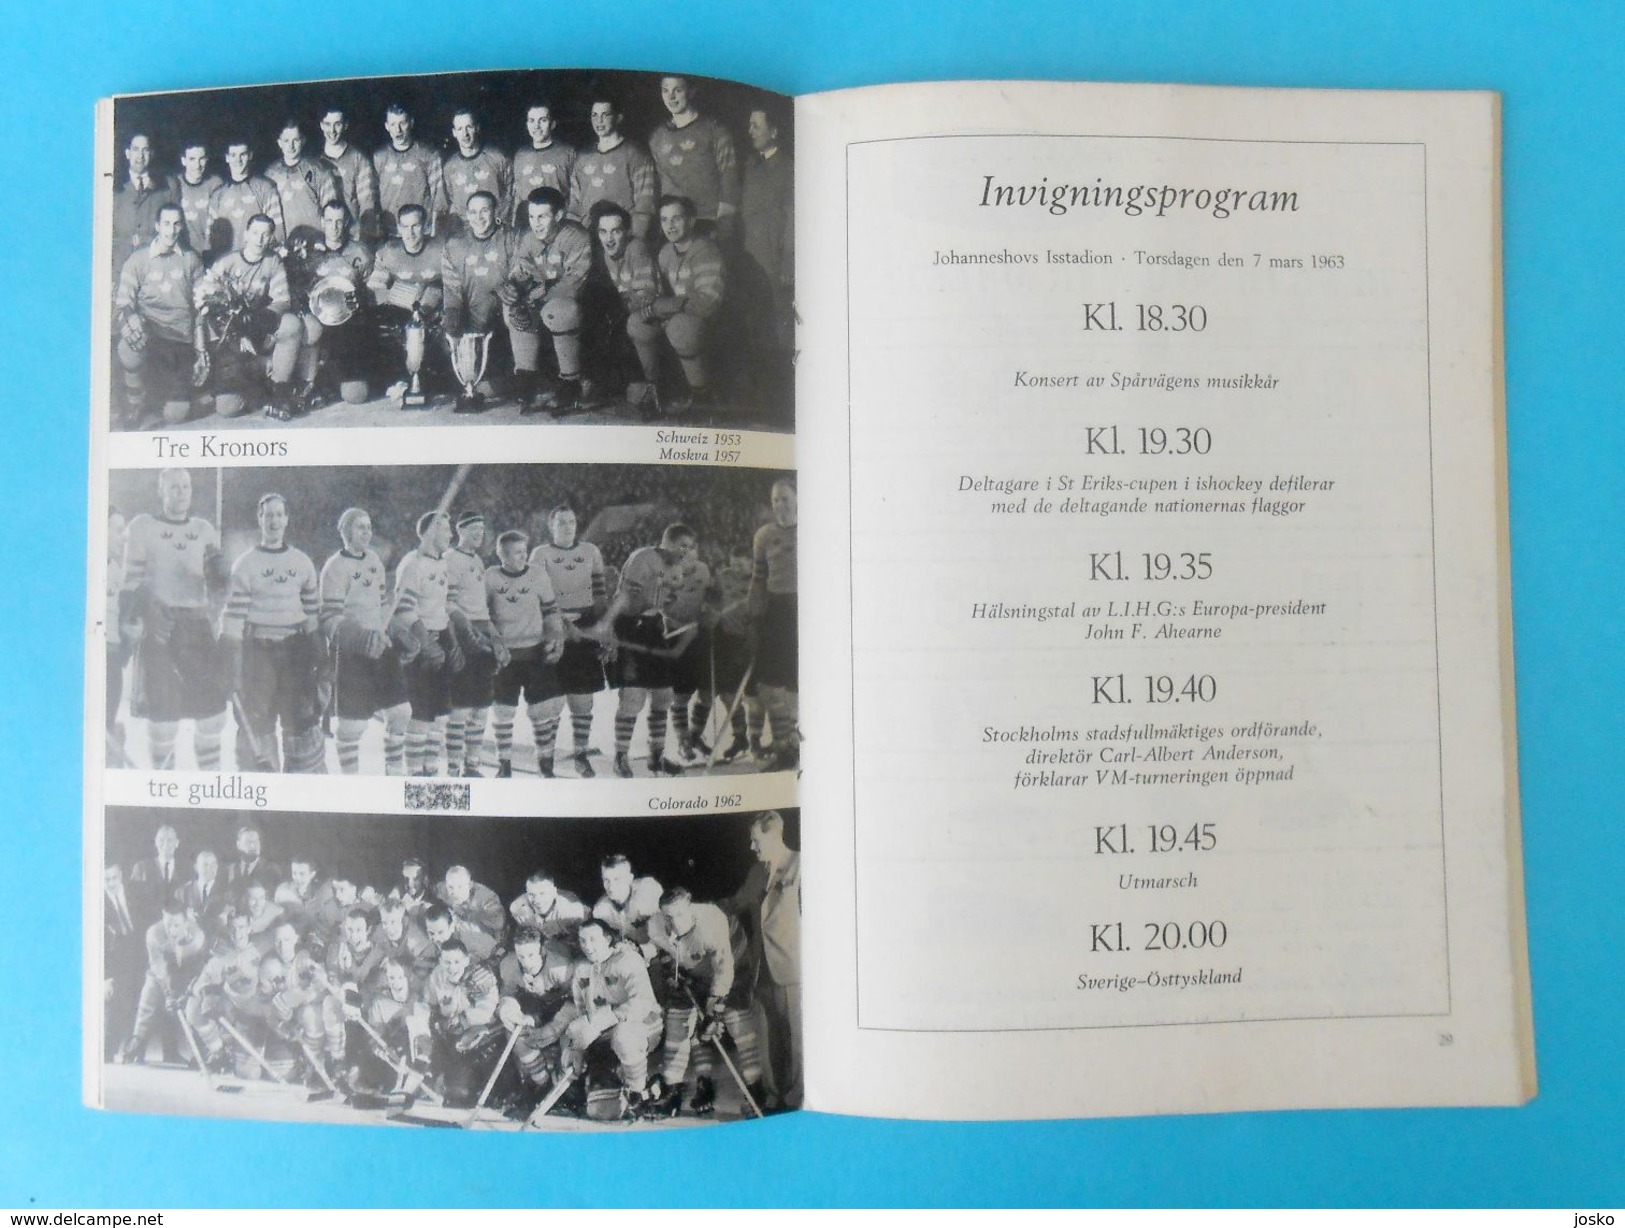 1963 ICE HOCKEY WORLD CHAMPIONSHIP (Sweden) programme * h. sur glace eishockey h. su ghiaccio programm programma program